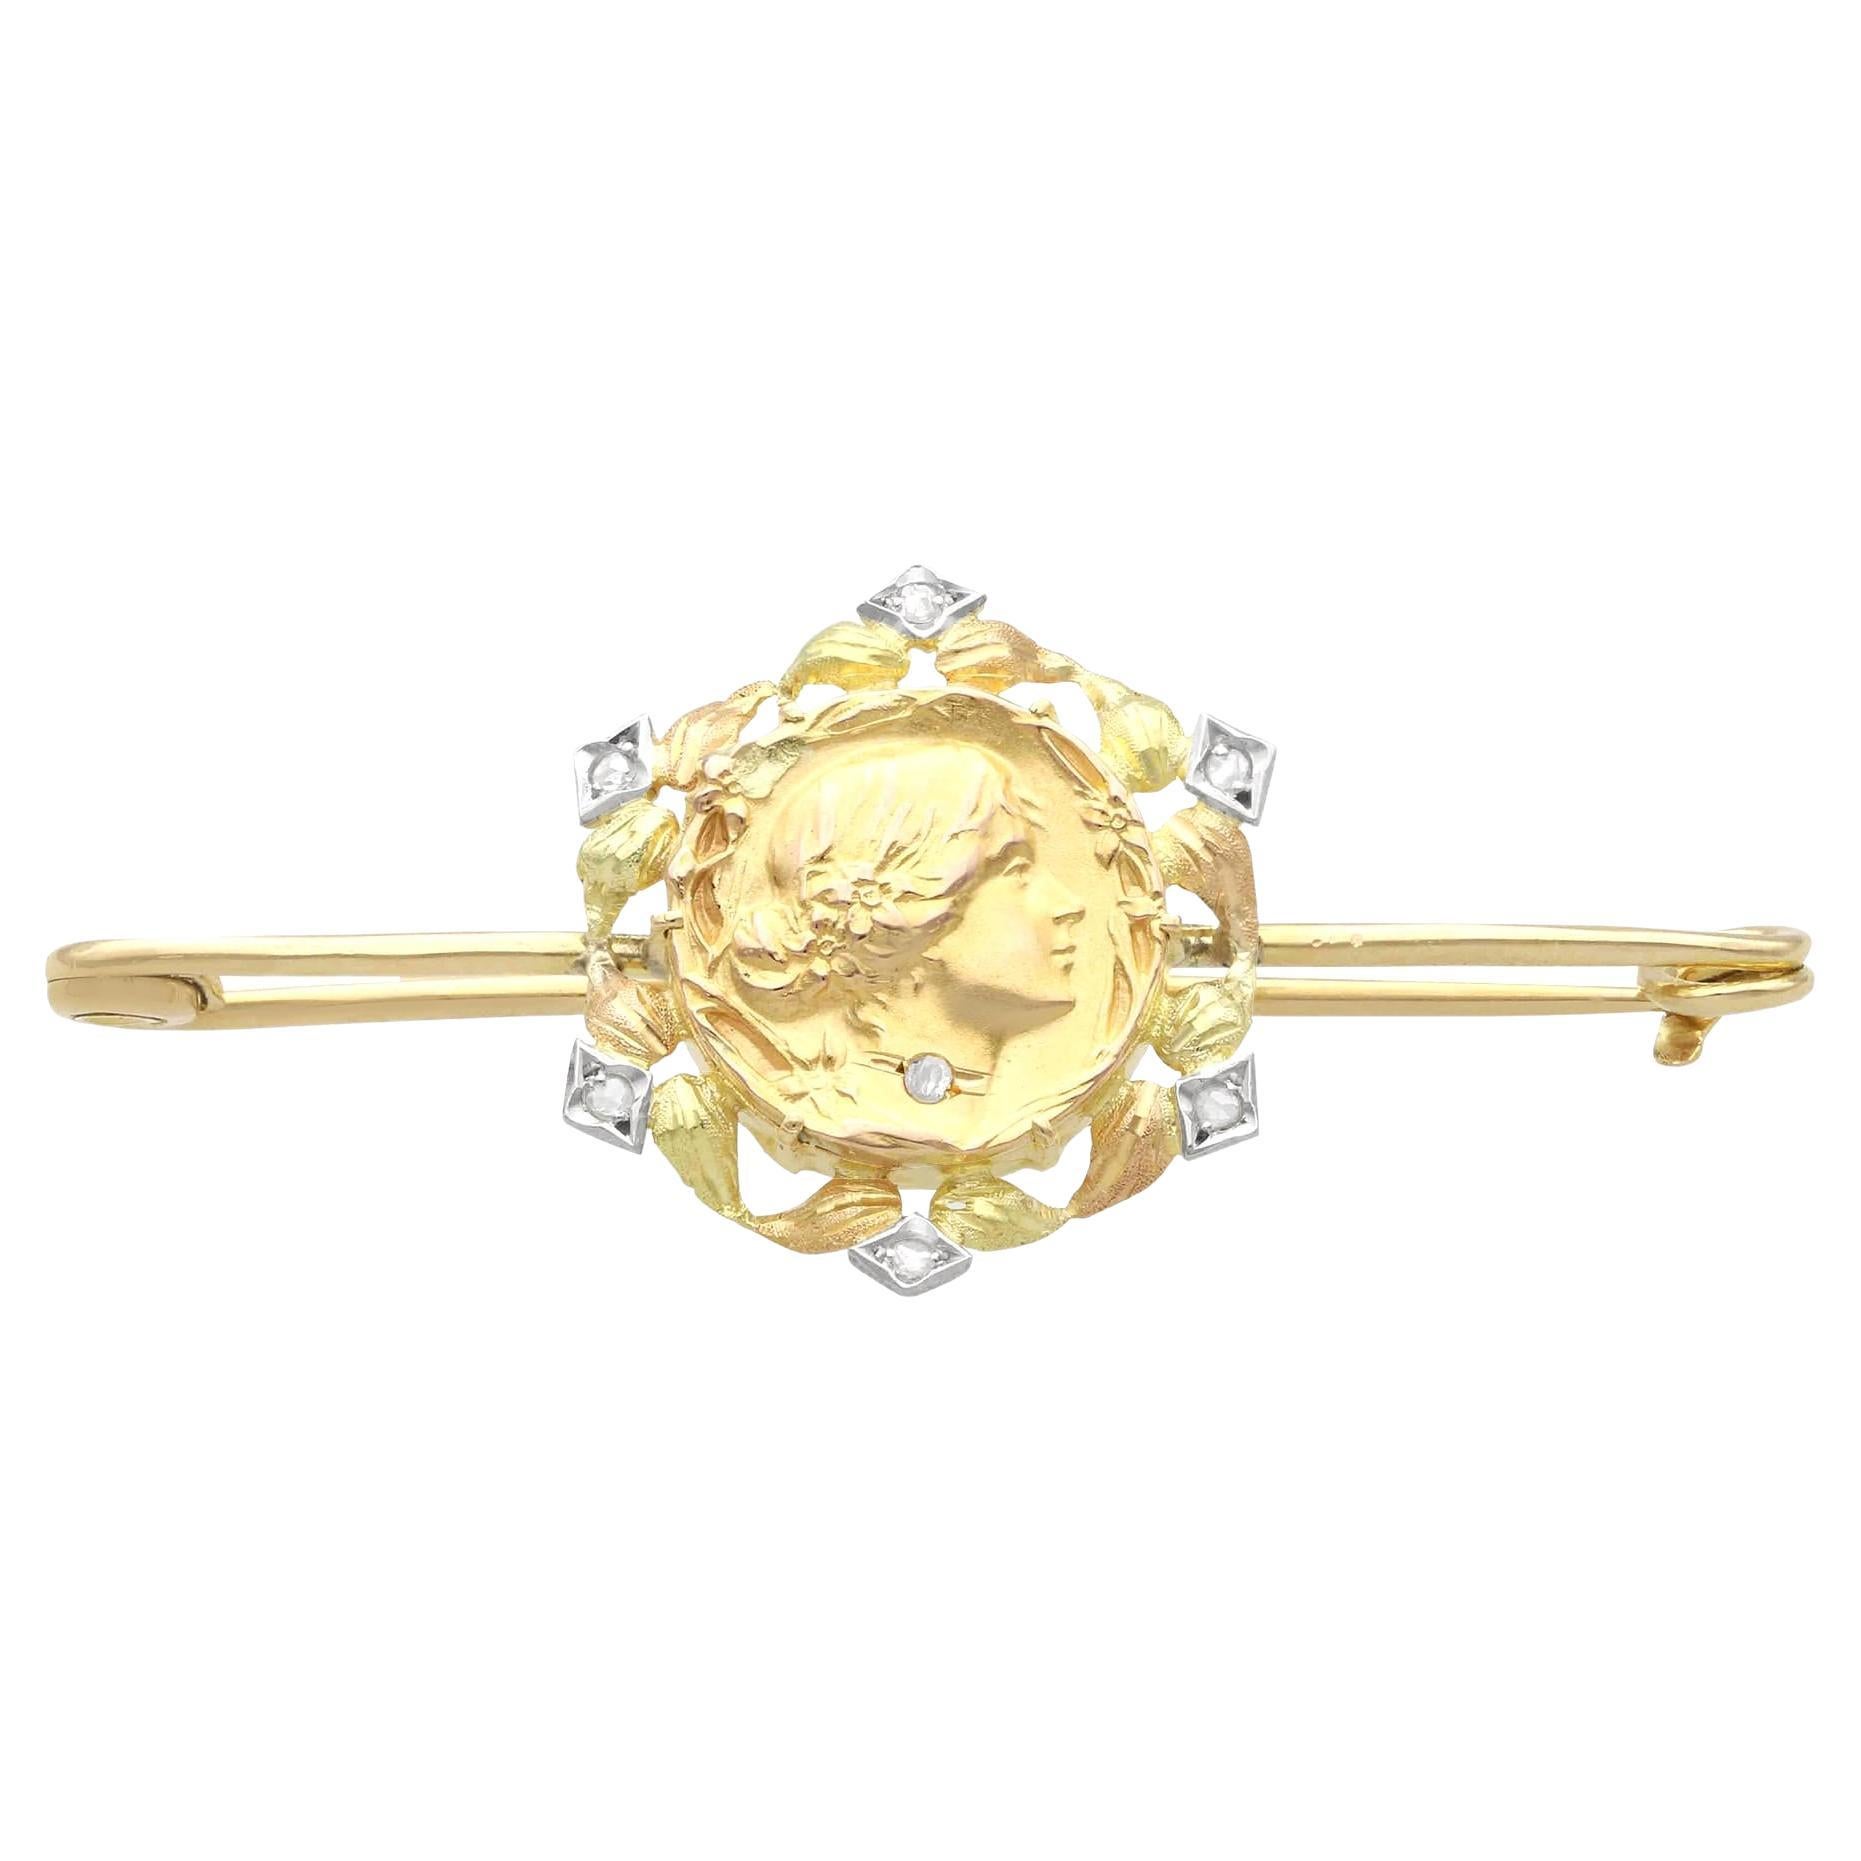 Antique Art Nouveau 0.13 Carat Diamond and 21K Yellow Gold Bar Brooch For Sale